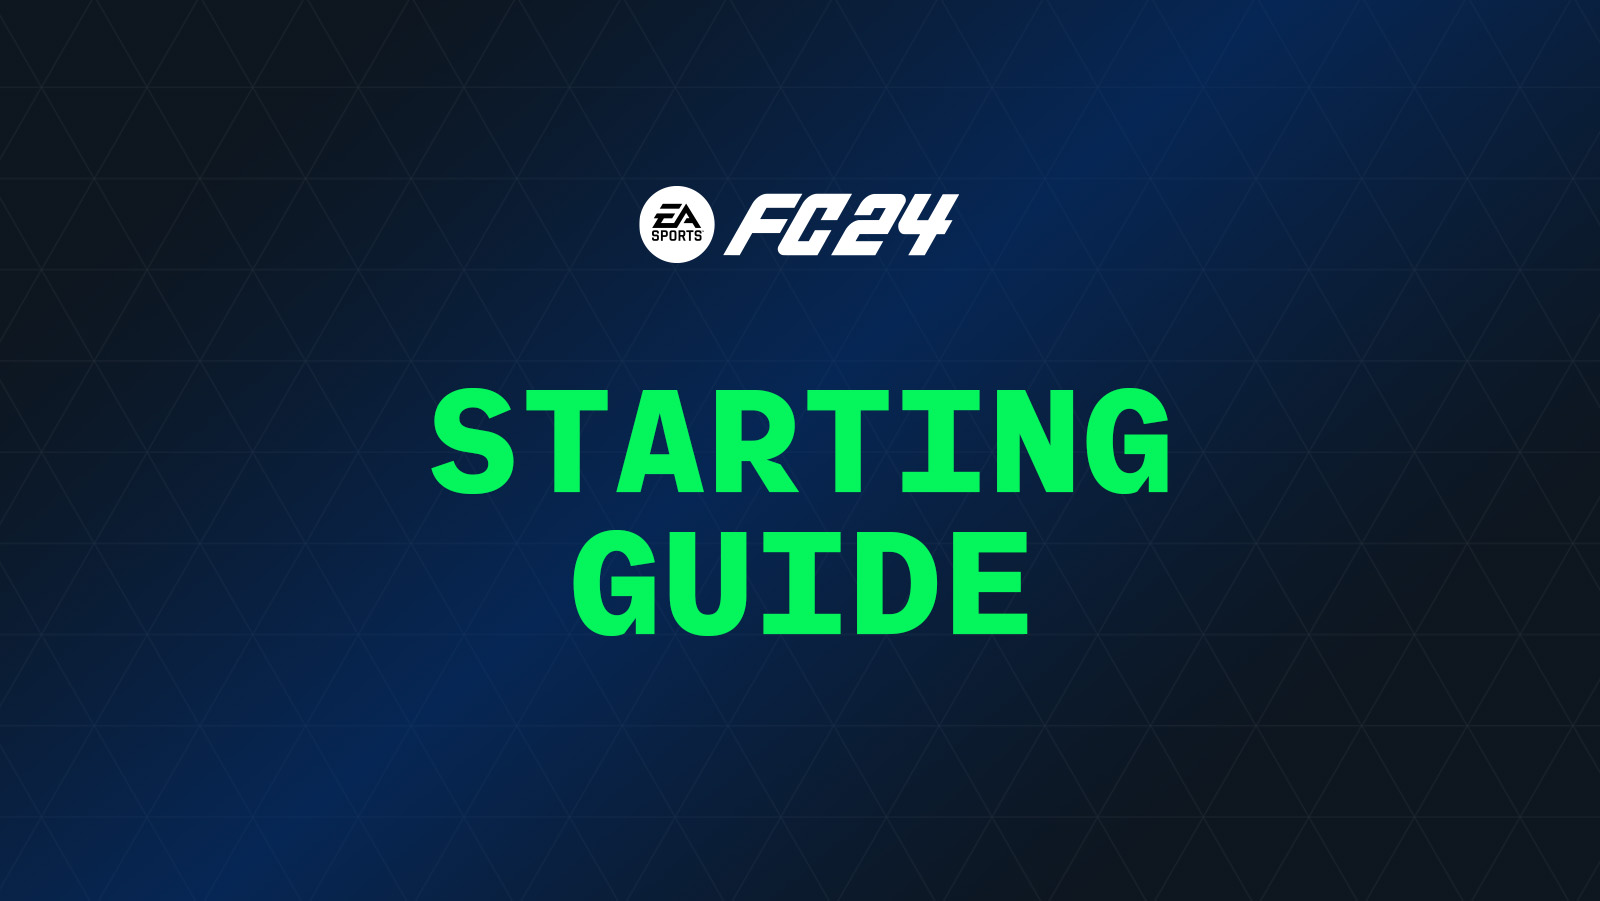 EA FC 24 Web App Guide - Companion App Release Date, Features & More